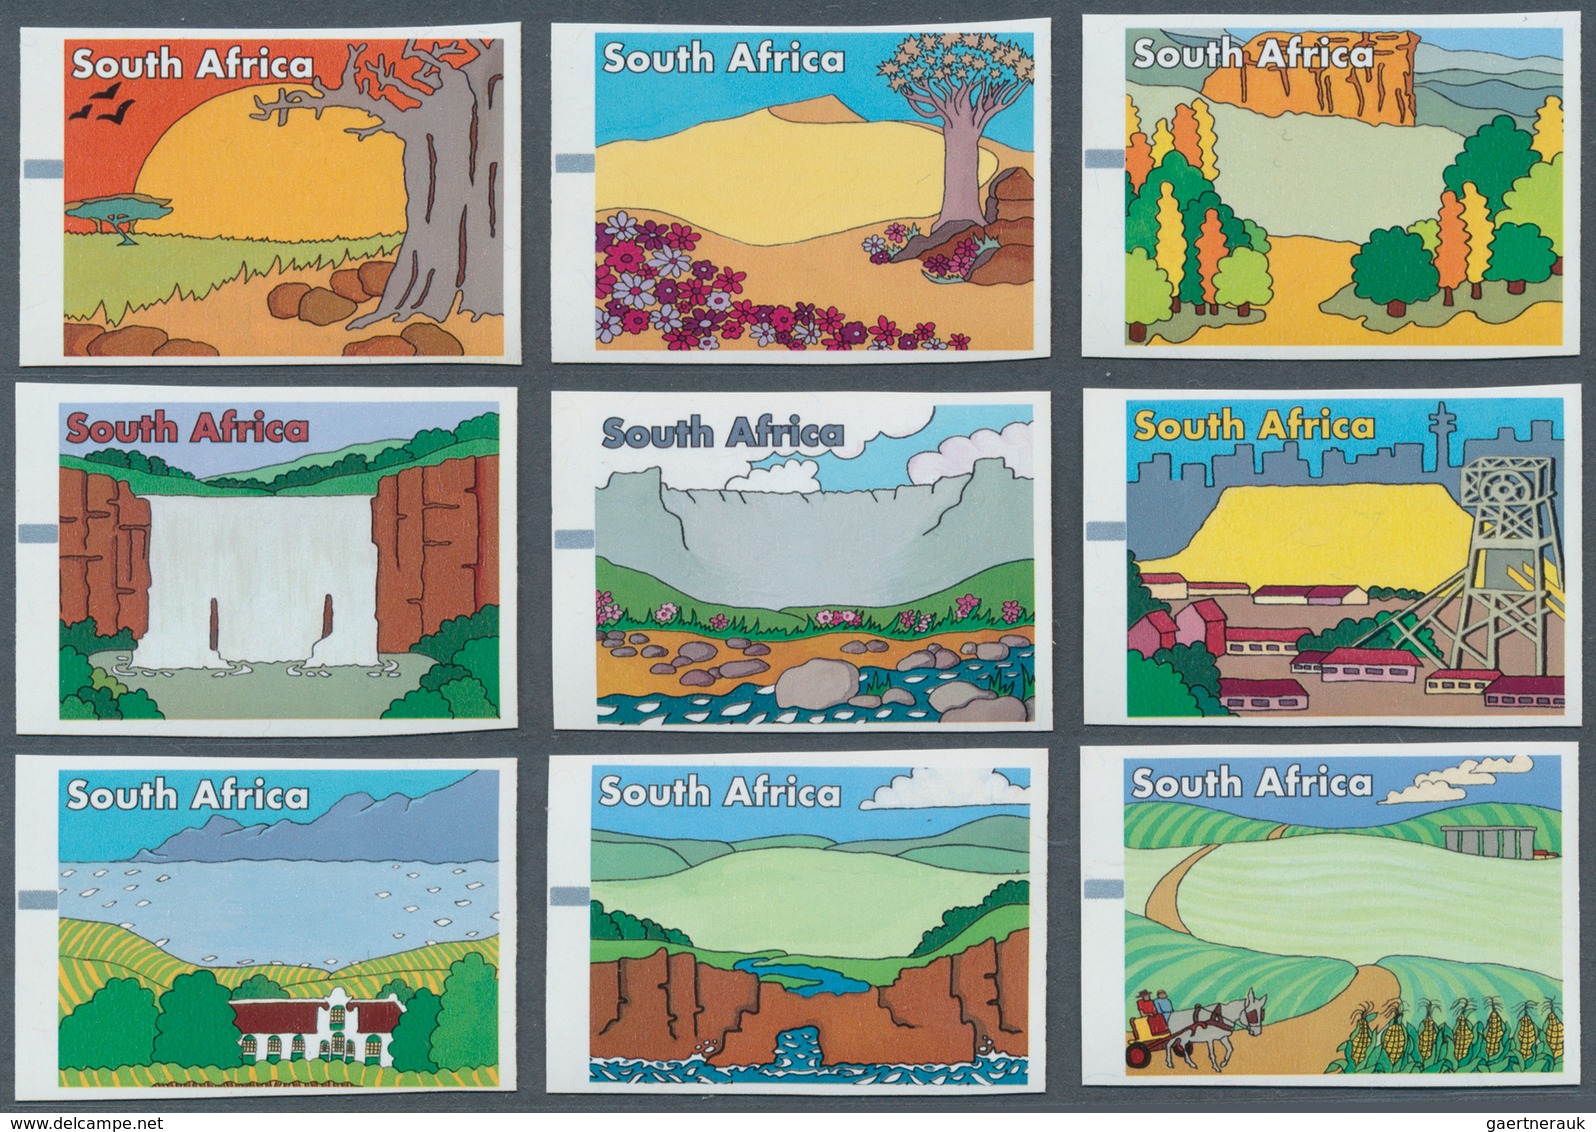 Südafrika - Automatenmarken: 1998, Pictorials, Set Of All Nine Designs "without Value", Unmounted Mi - Vignettes D'affranchissement (Frama)